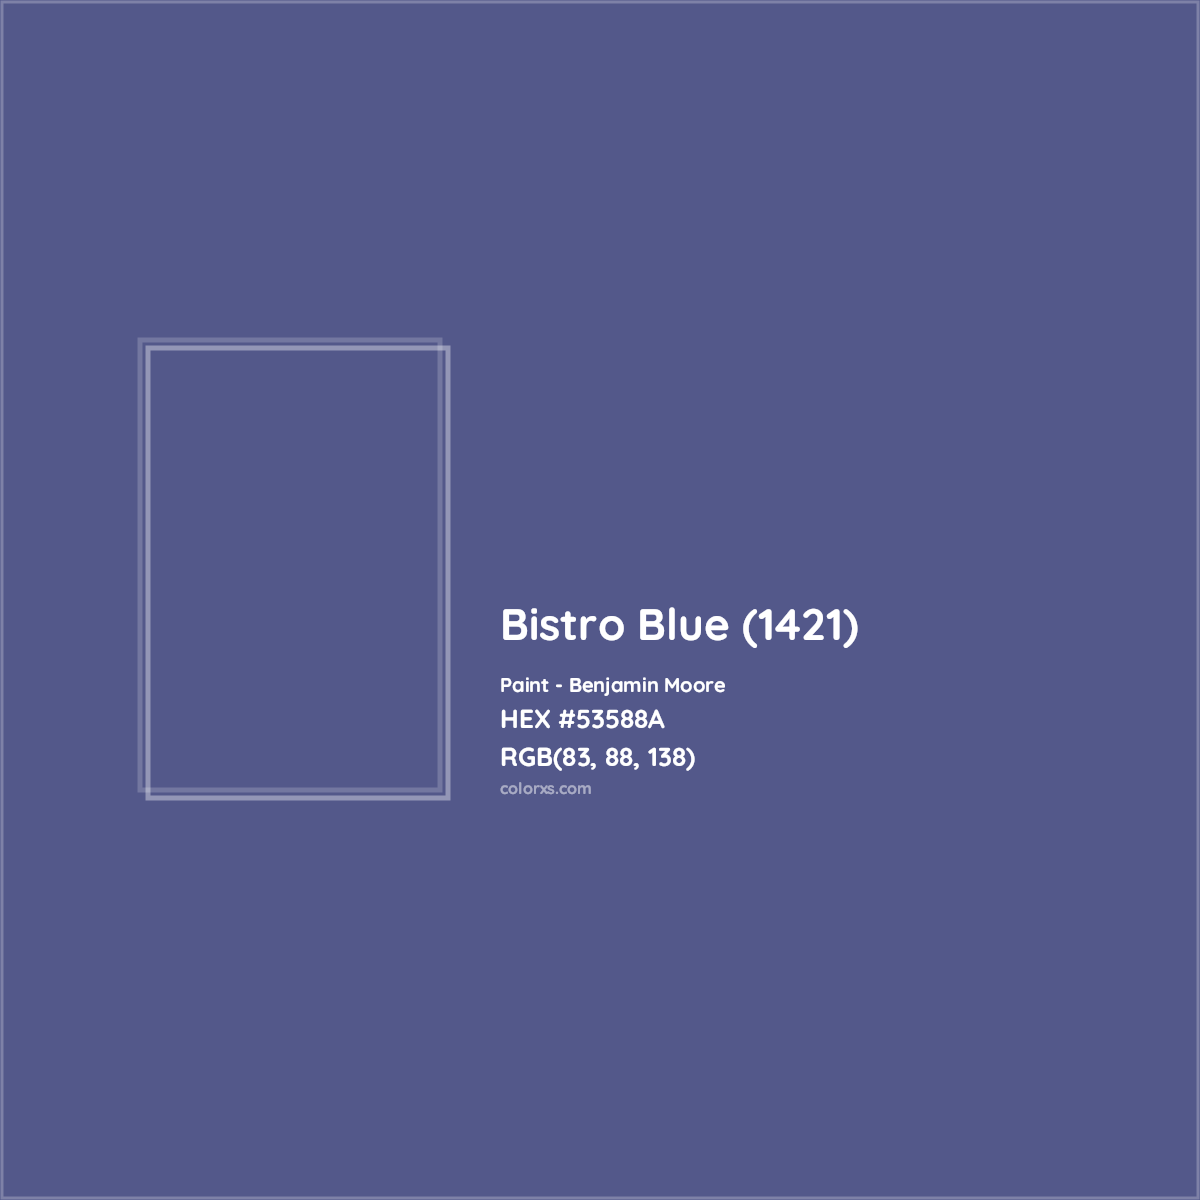 HEX #53588A Bistro Blue (1421) Paint Benjamin Moore - Color Code